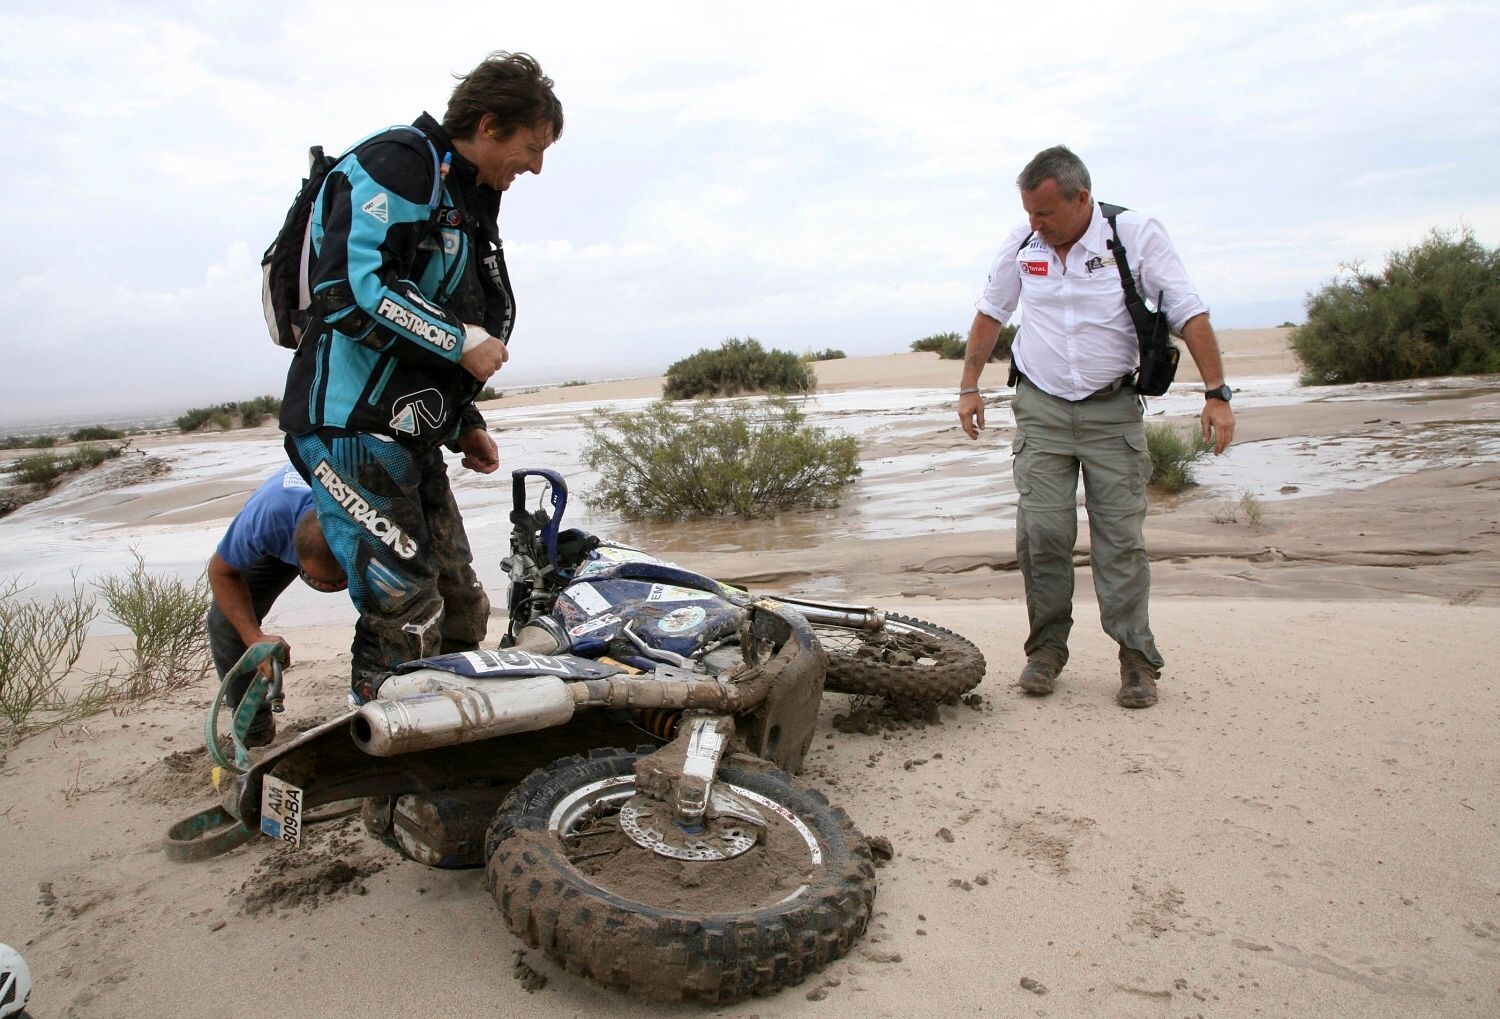 Rallye Dakar, 11. etapa: Herve Thierry, Yamaha a Etienne Lavigne